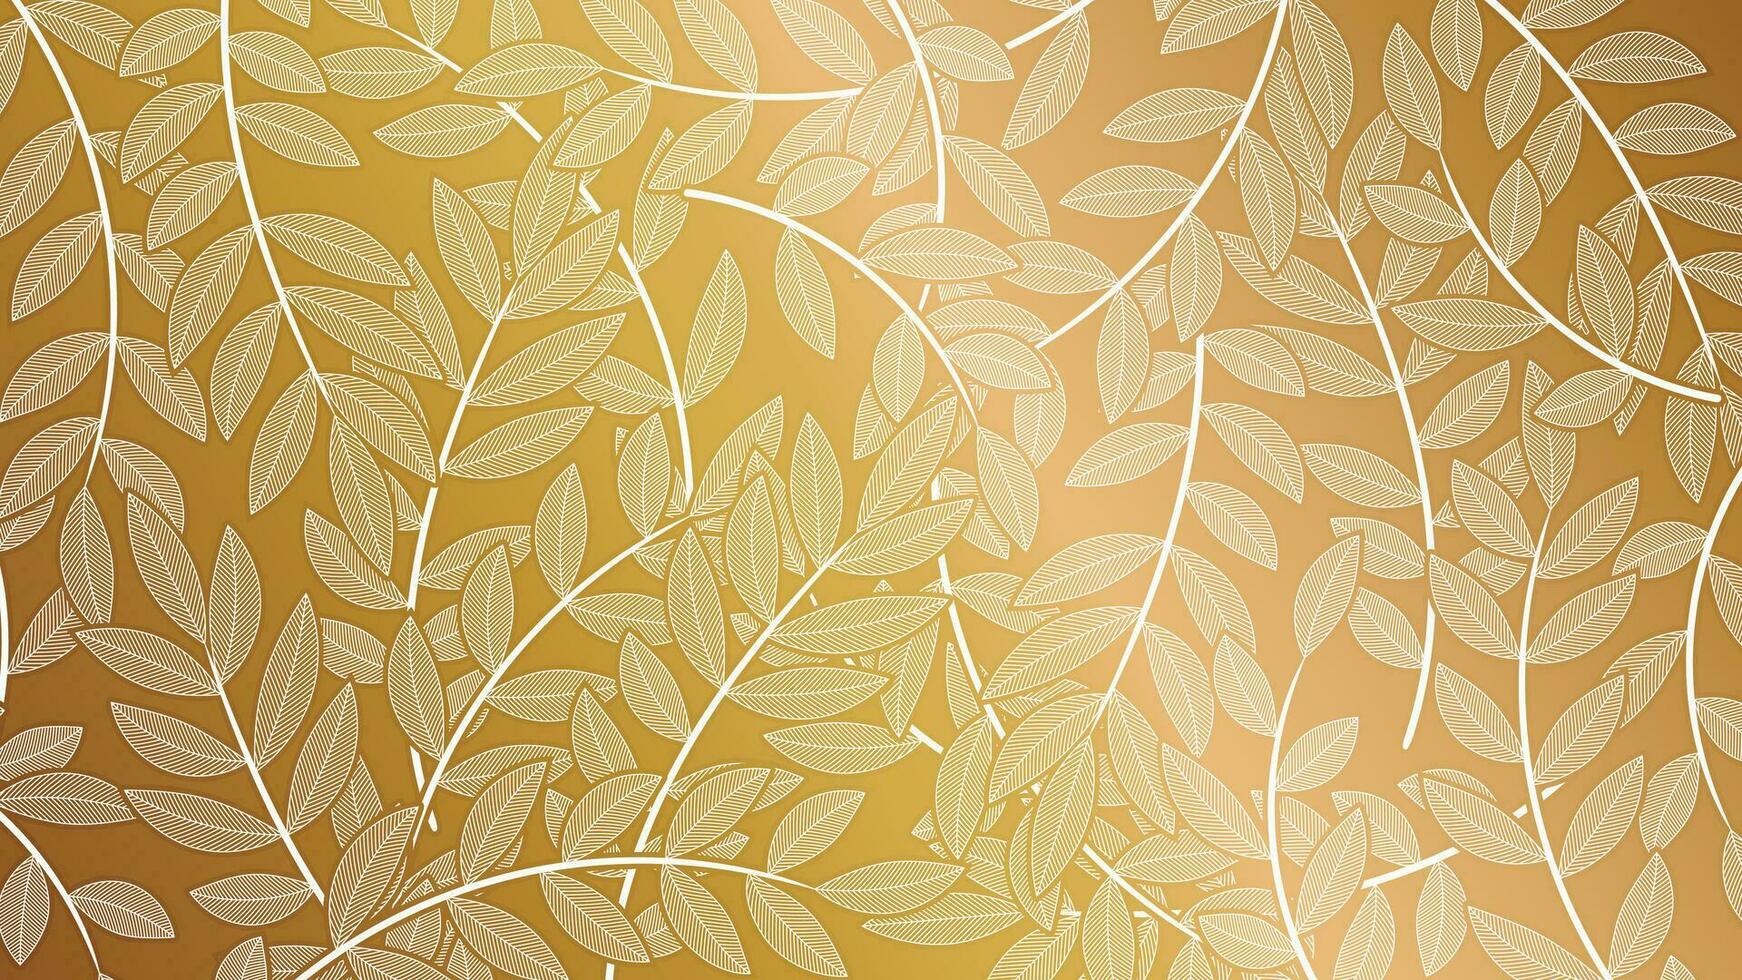 resumen oro follaje línea Arte vector antecedentes. hoja fondo de pantalla de tropical hojas, hoja rama, plantas en mano dibujado modelo. botánico selva ilustrado para bandera, huellas dactilares, decoración, tela.